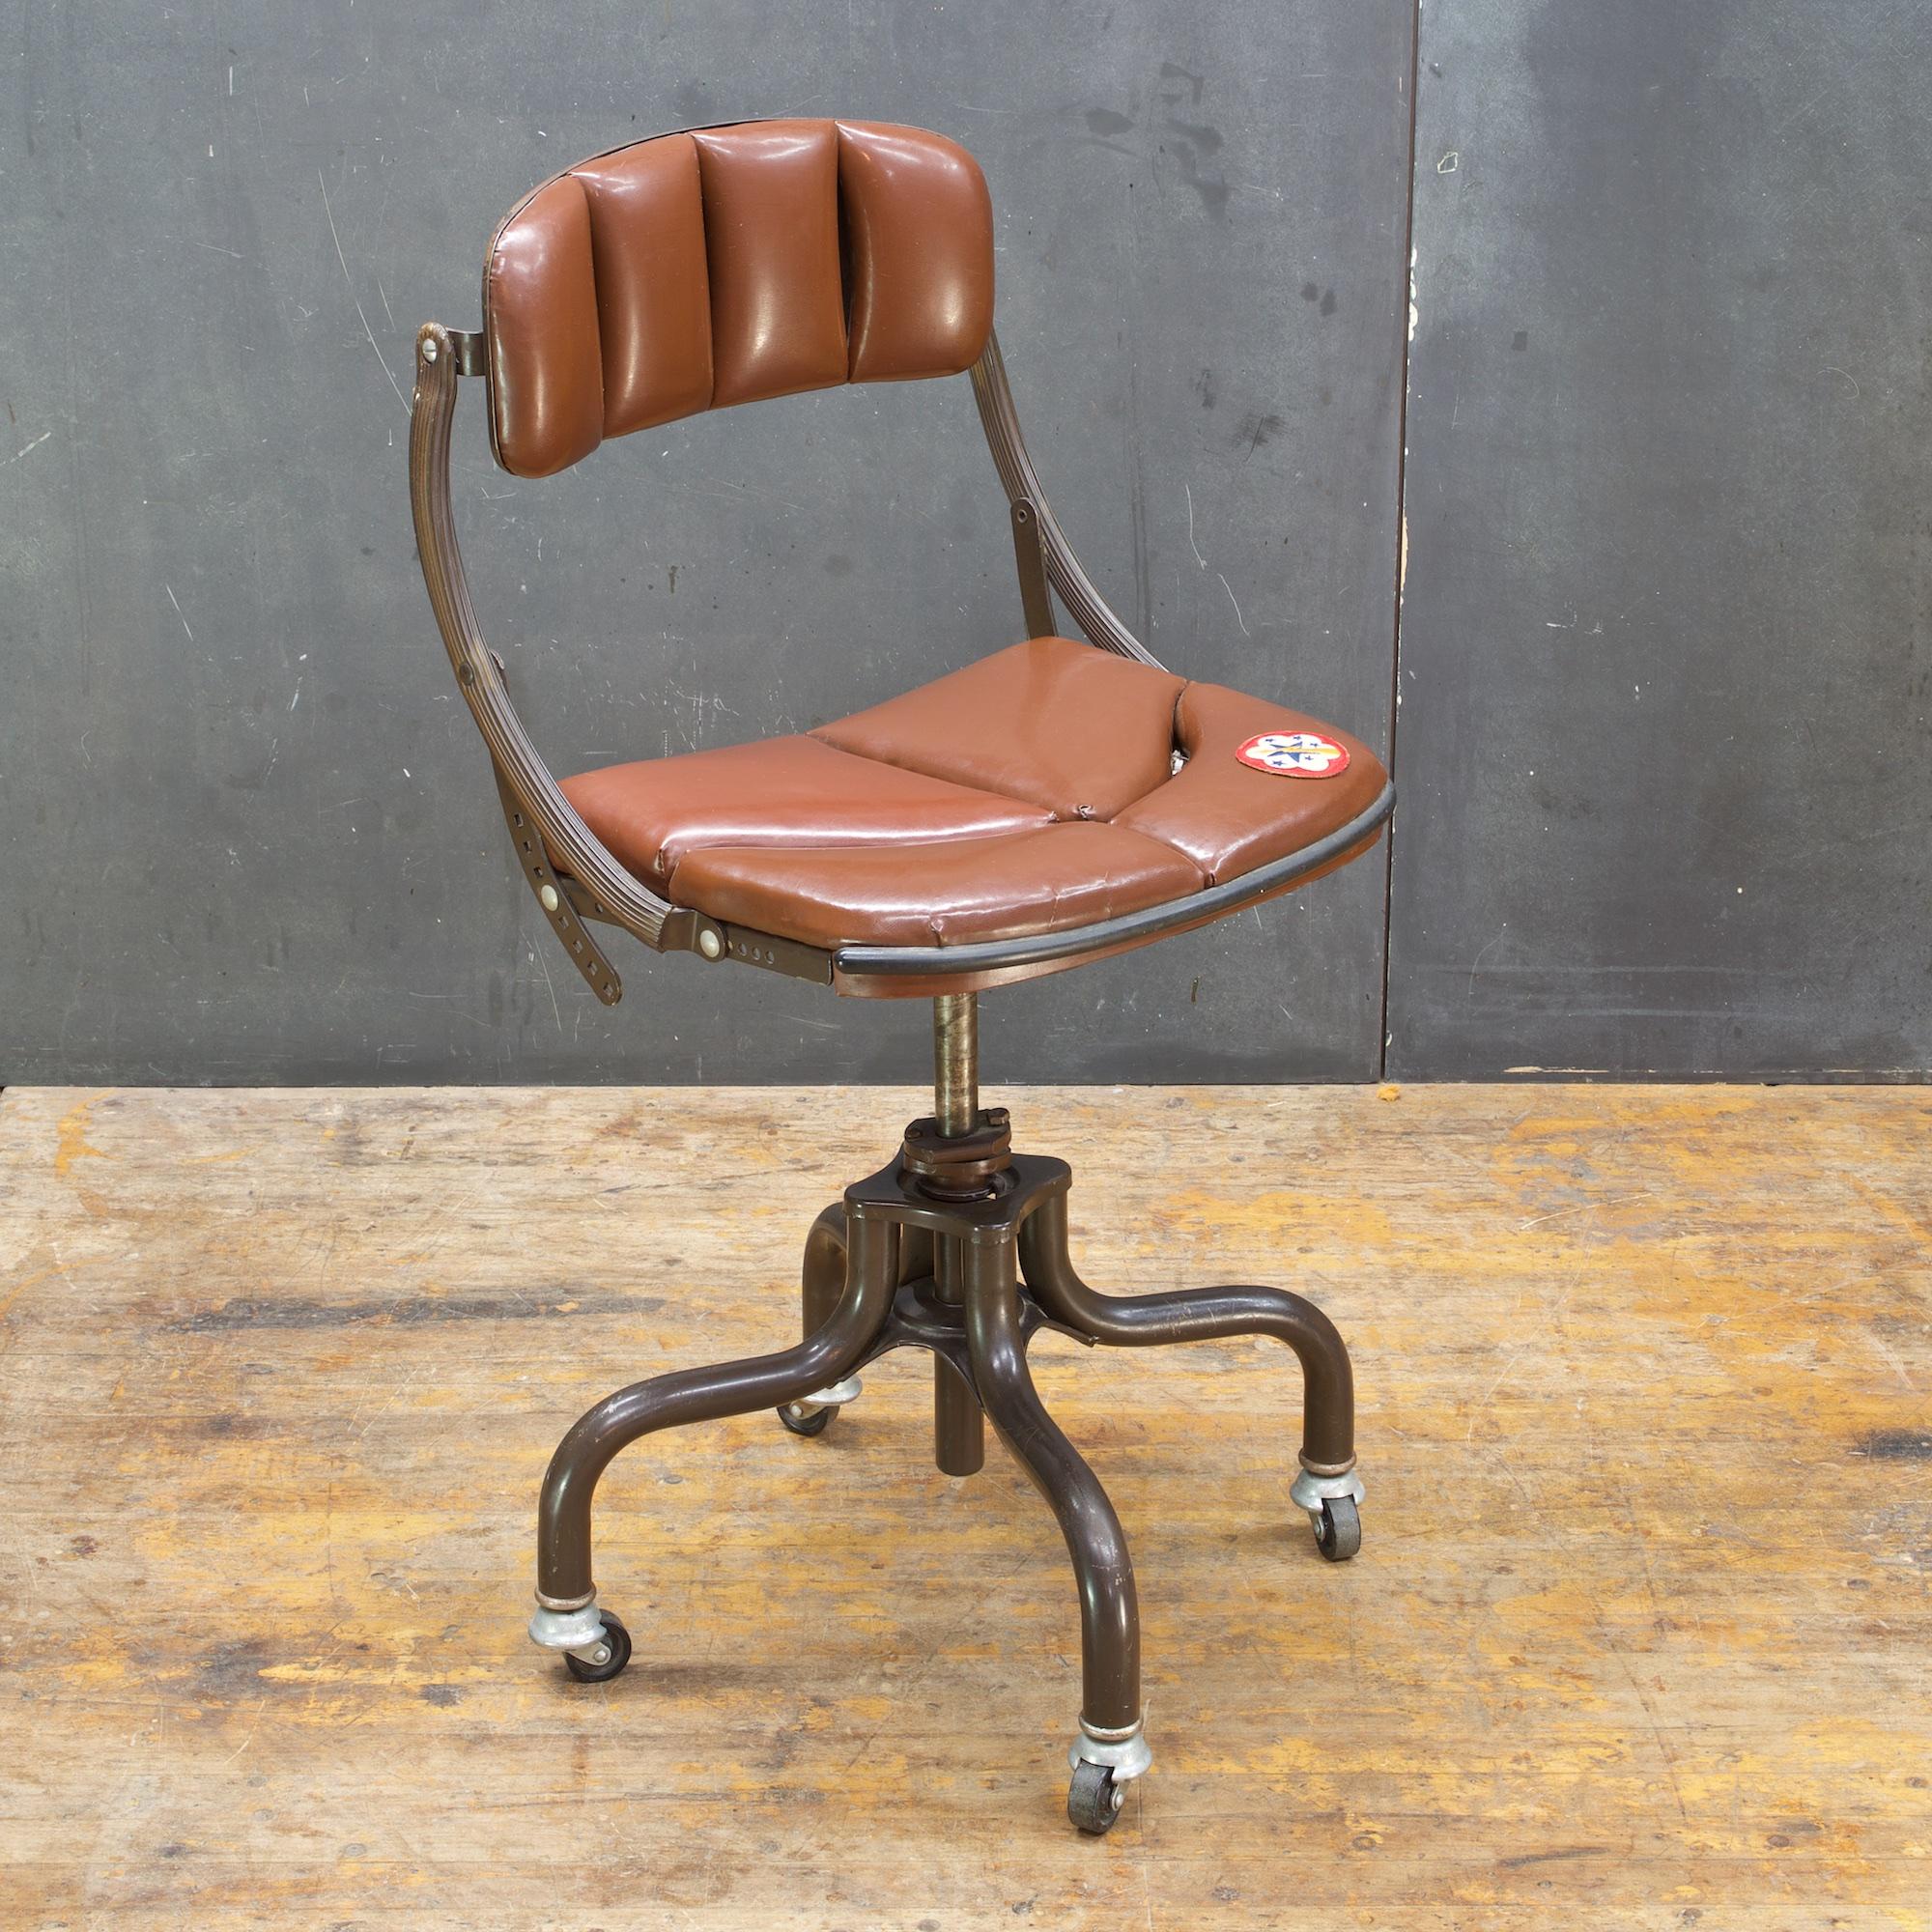 1930s desk chair